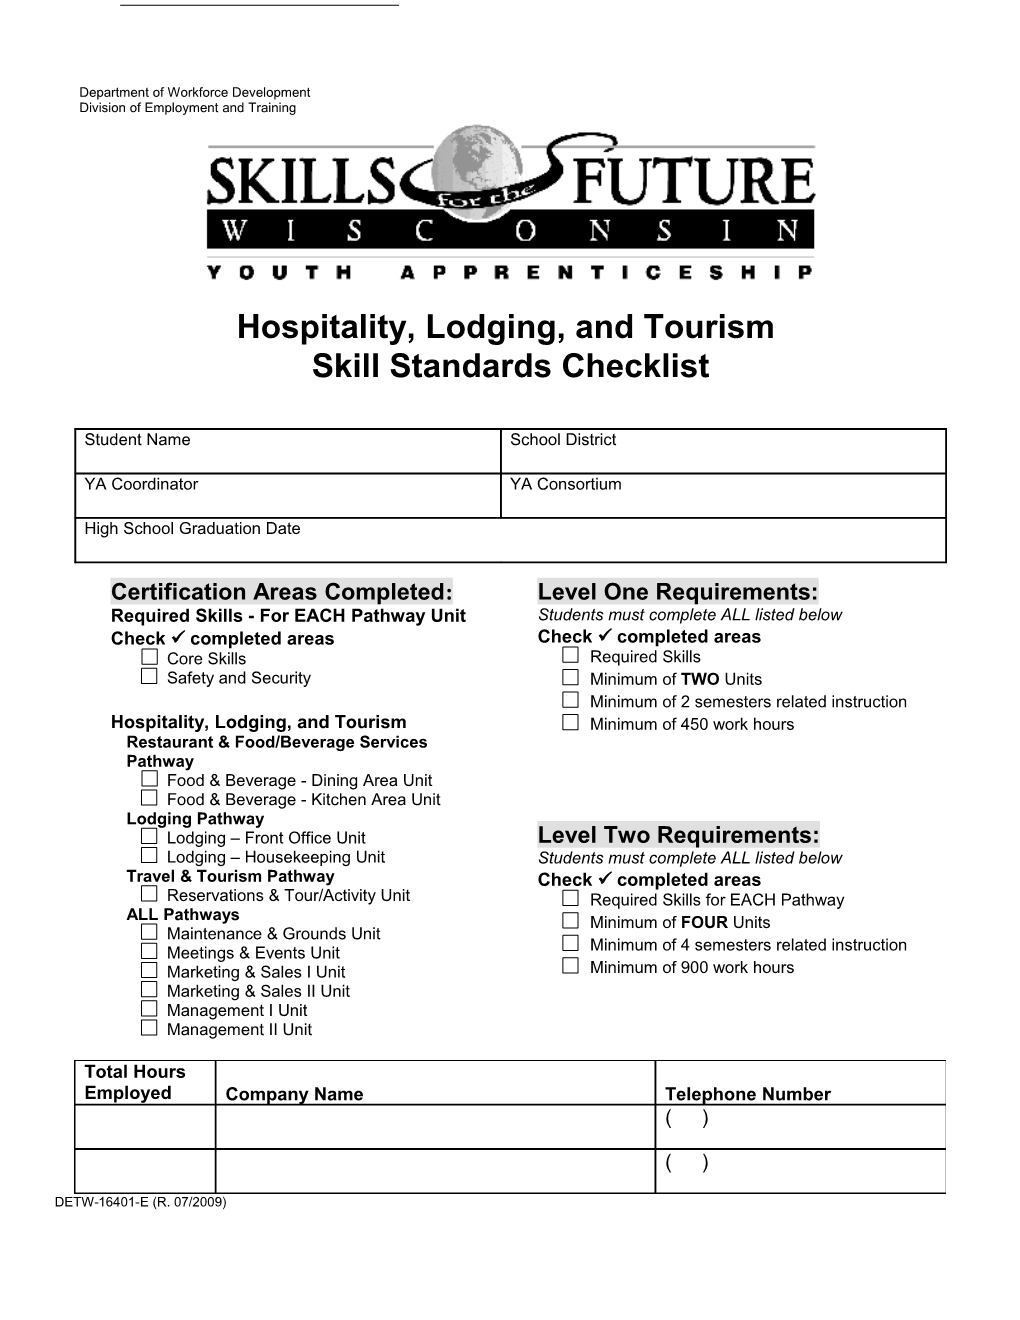 DETW-16401-E, Hospitality, Lodging & Tourism Skill Standards Checklist